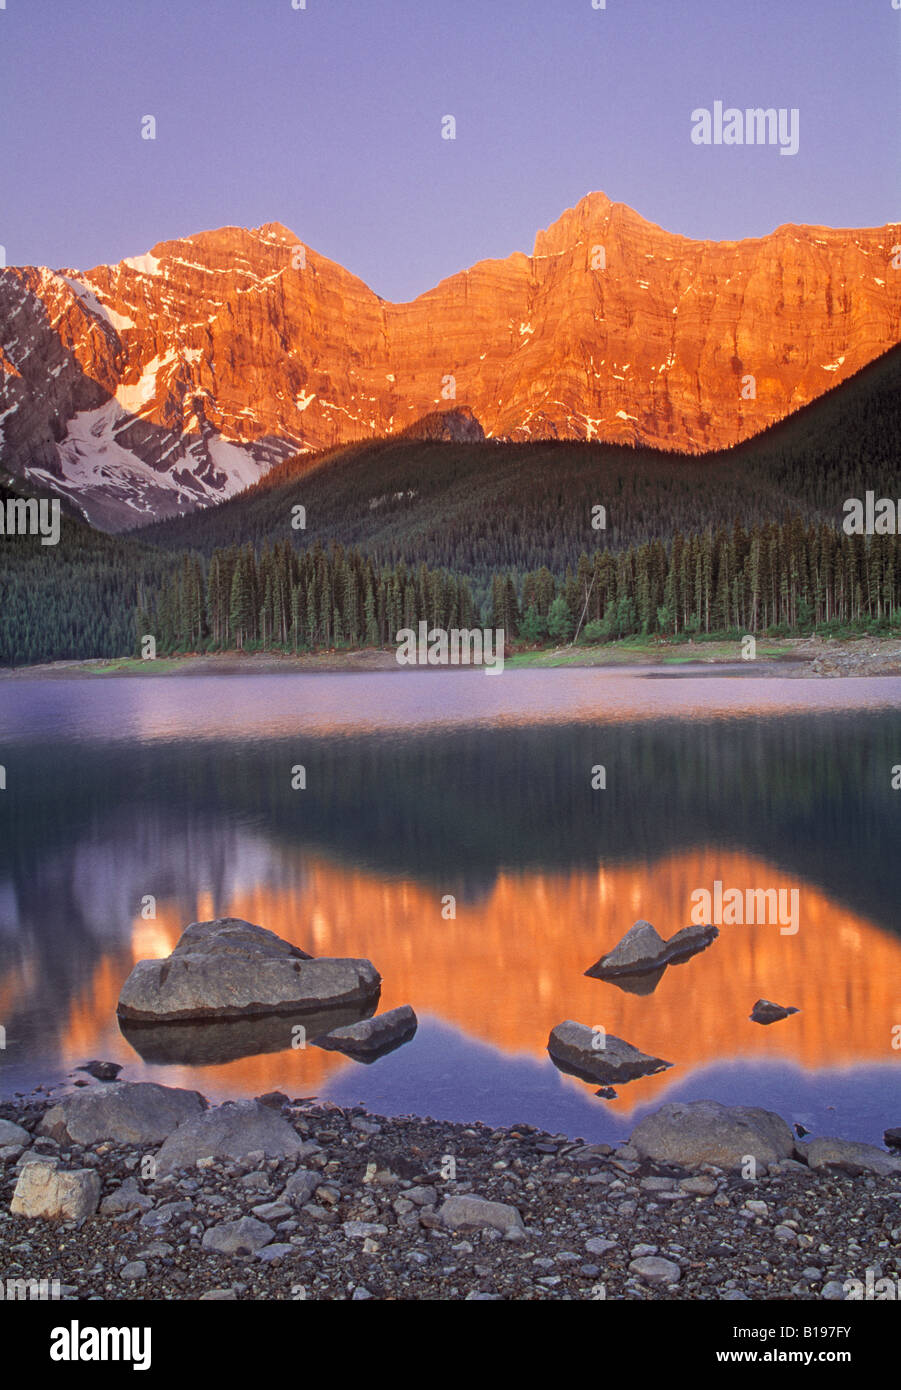 La région de Kananaskis, Lake Parc provincial Peter Lougheed, Kanananskis Country, Alberta, Canada Banque D'Images